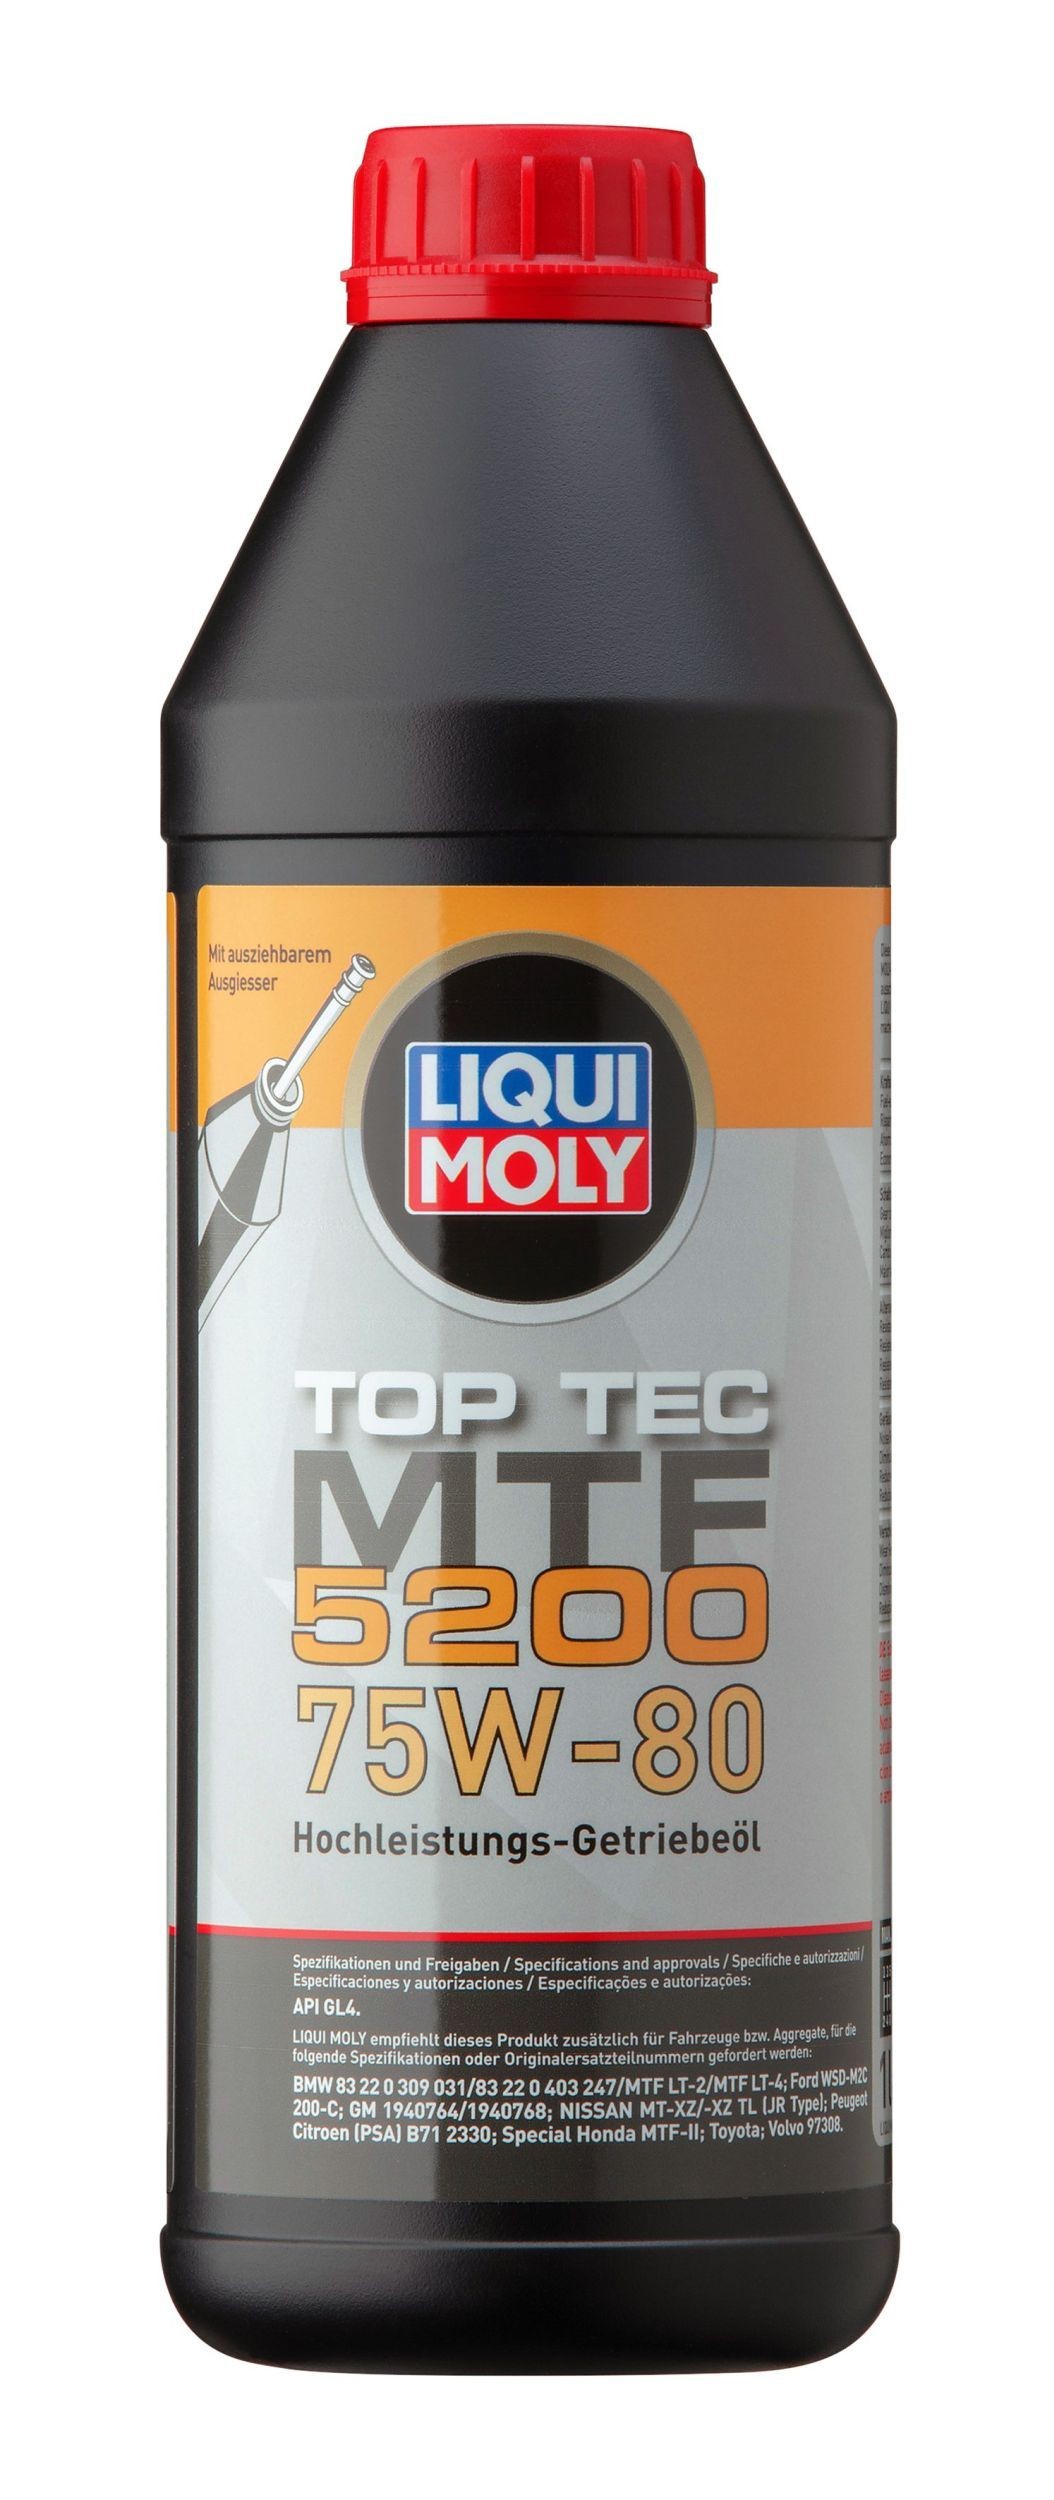 LIQUI MOLY Top Tec, MTF 5200 20845 HUSQVARNA Getriebeöl Motorrad zum günstigen Preis